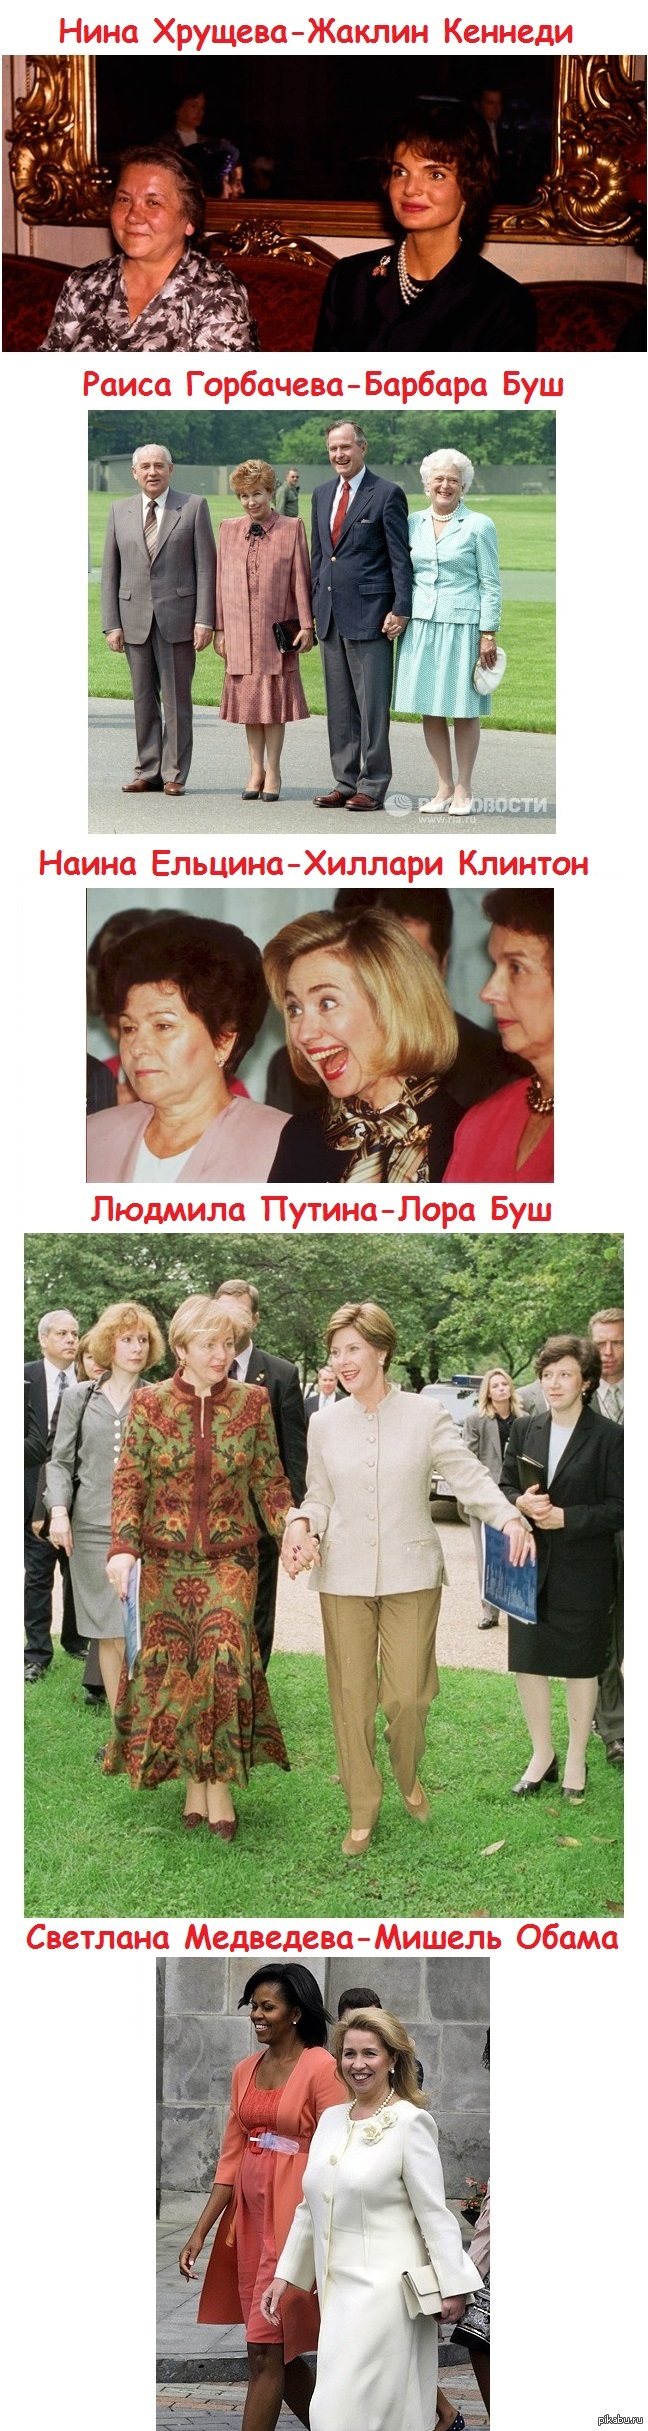 Лора Буш и Людмила Путина